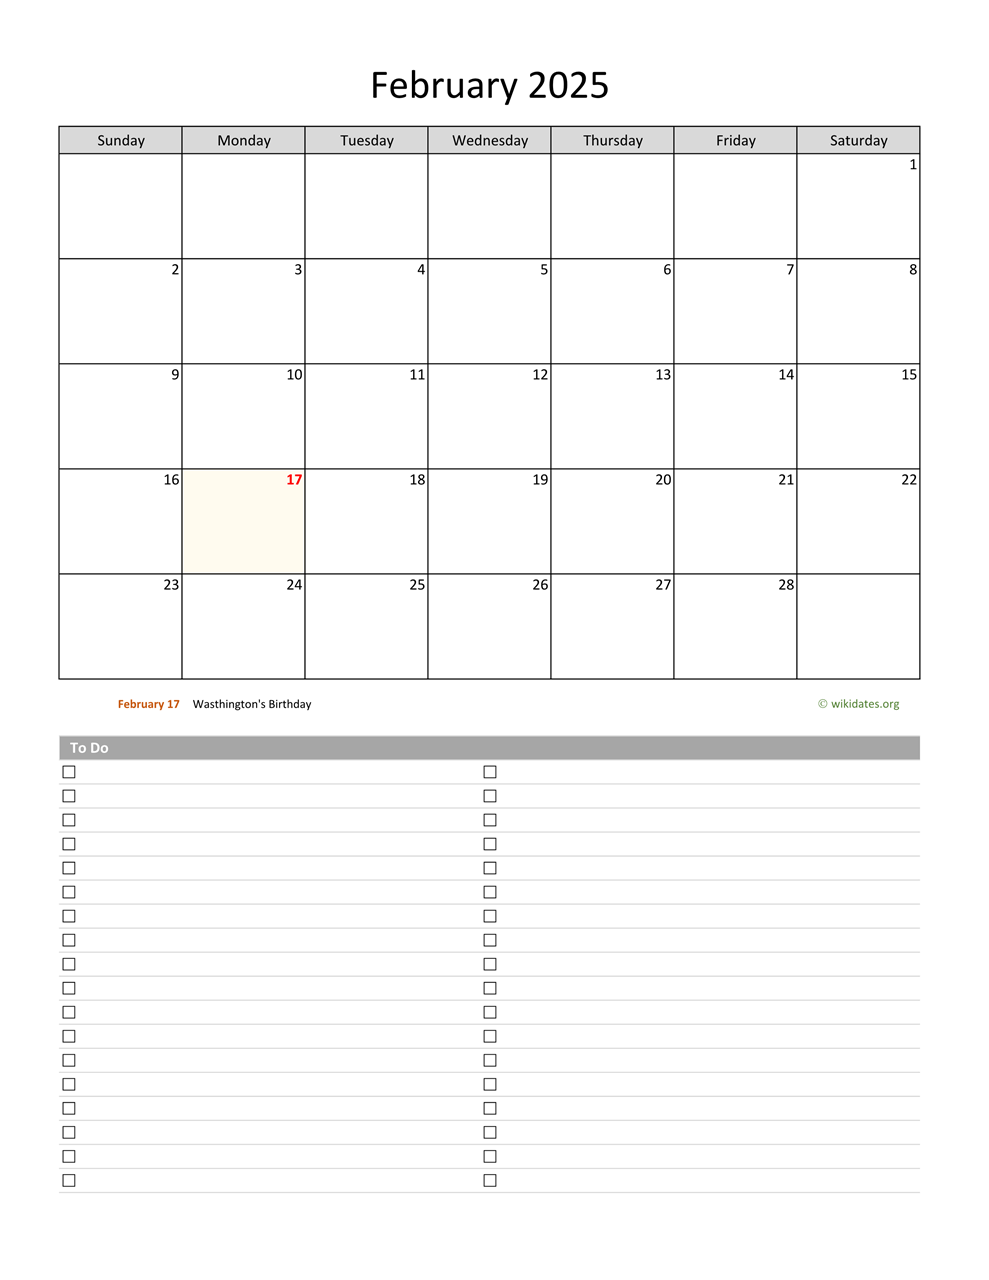 february-2025-calendar-with-to-do-list-wikidates